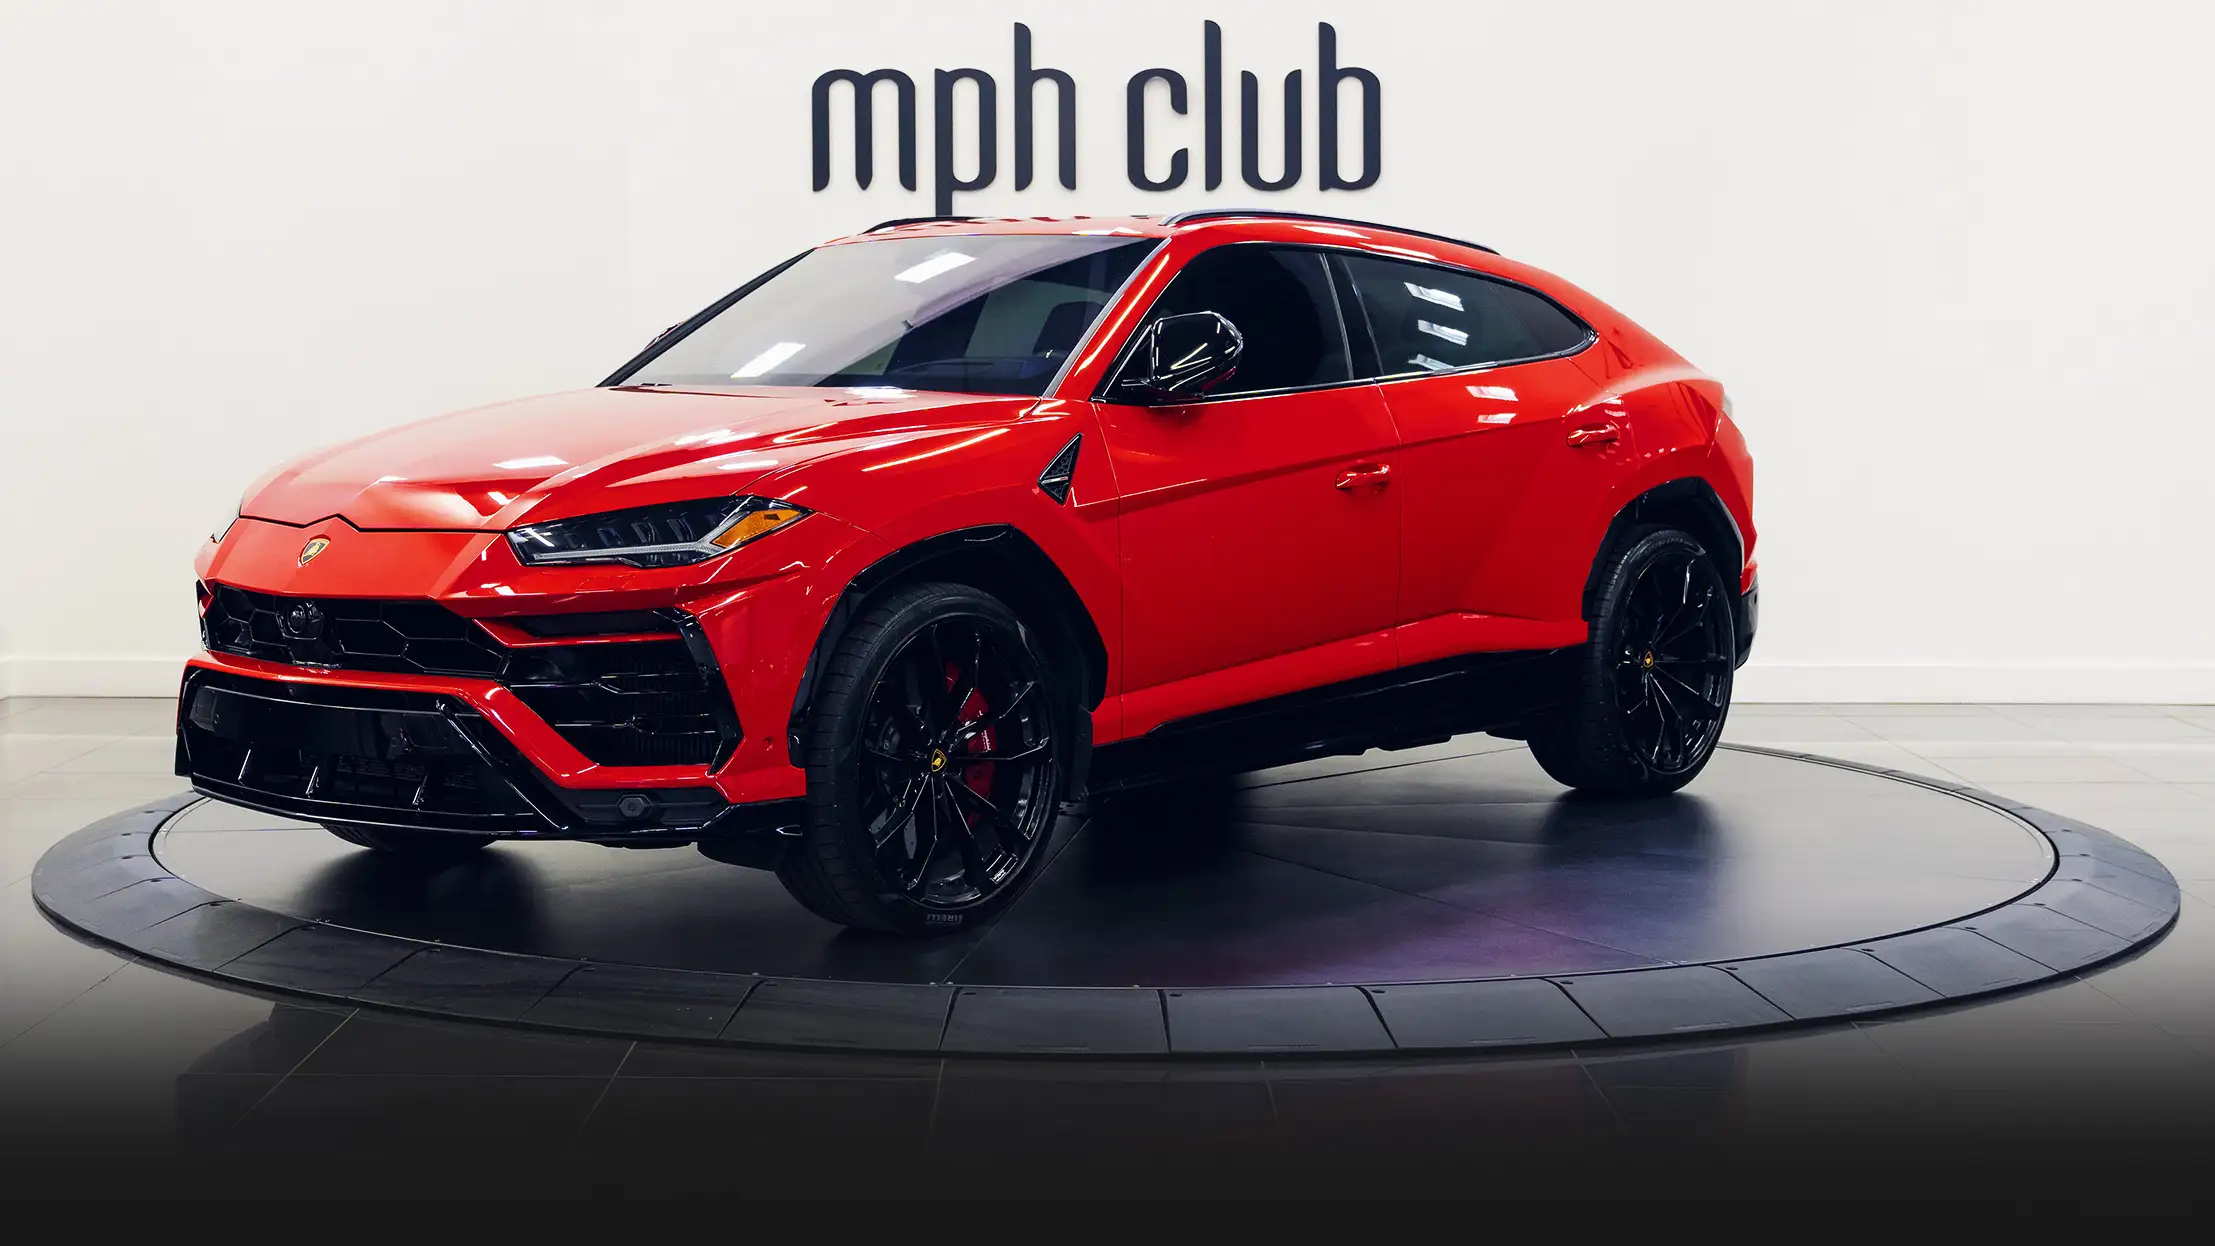 Red on black Lamborghini Urus rental profile view mph club